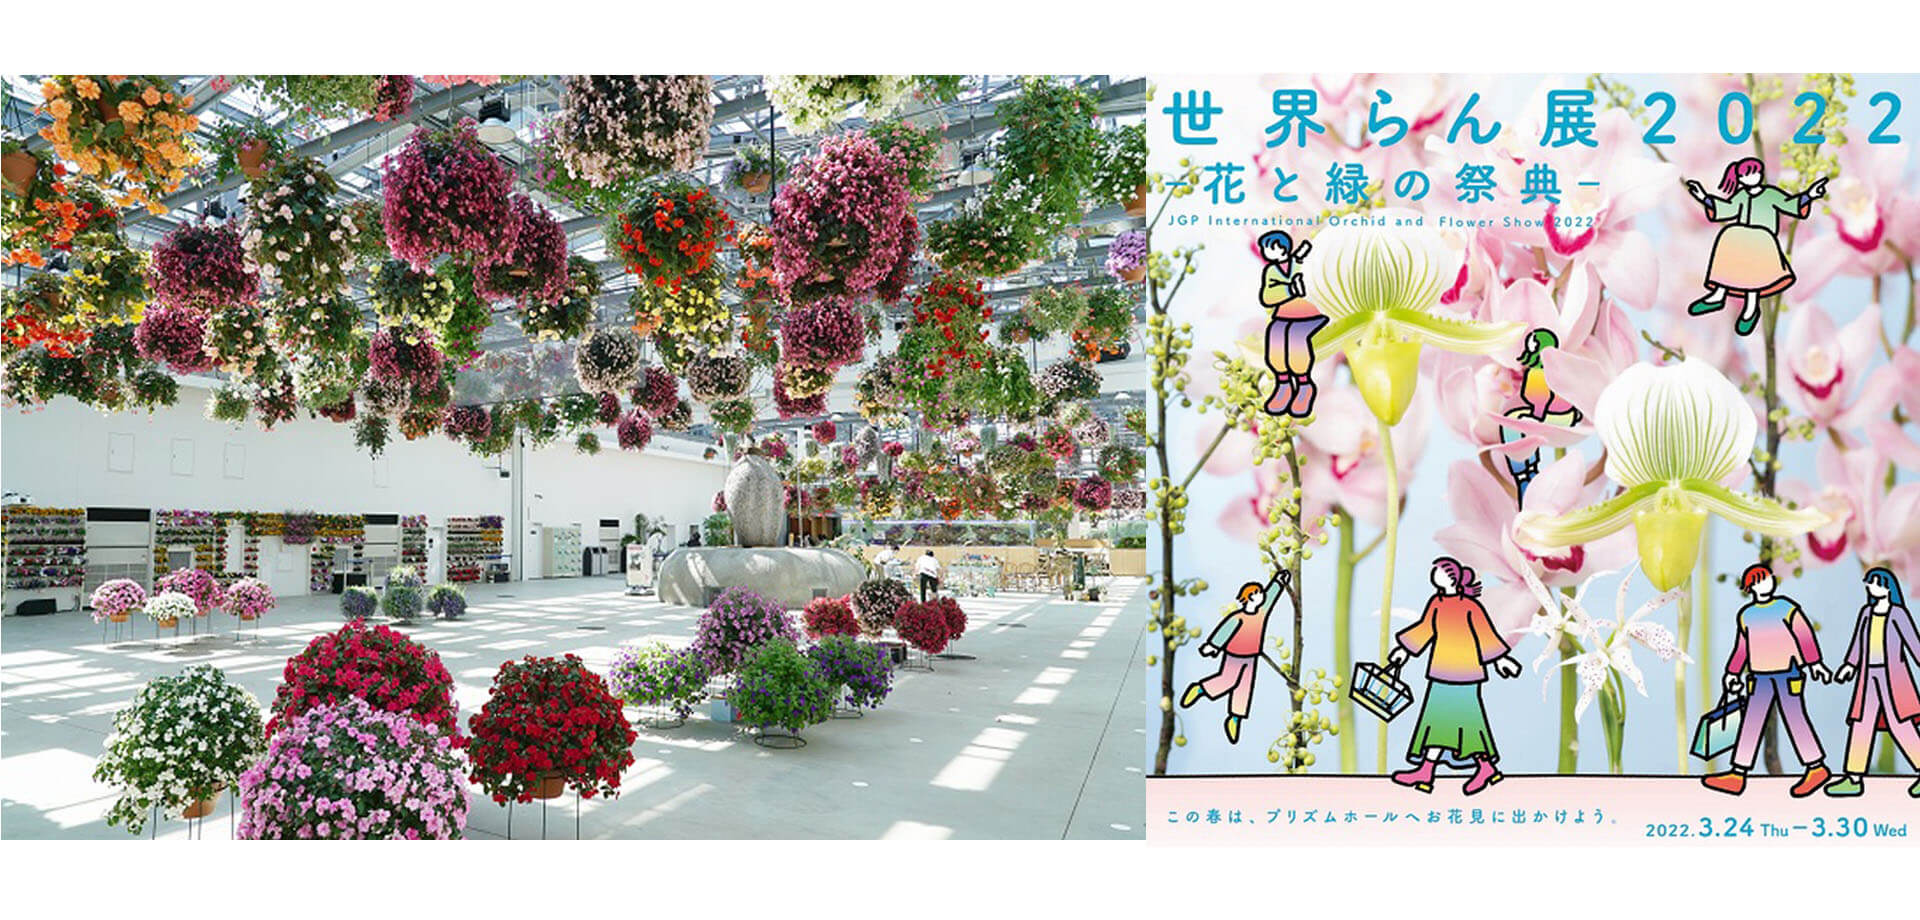 「HANA・BIYORI」「世界らん展2022-花と緑の祭典-」